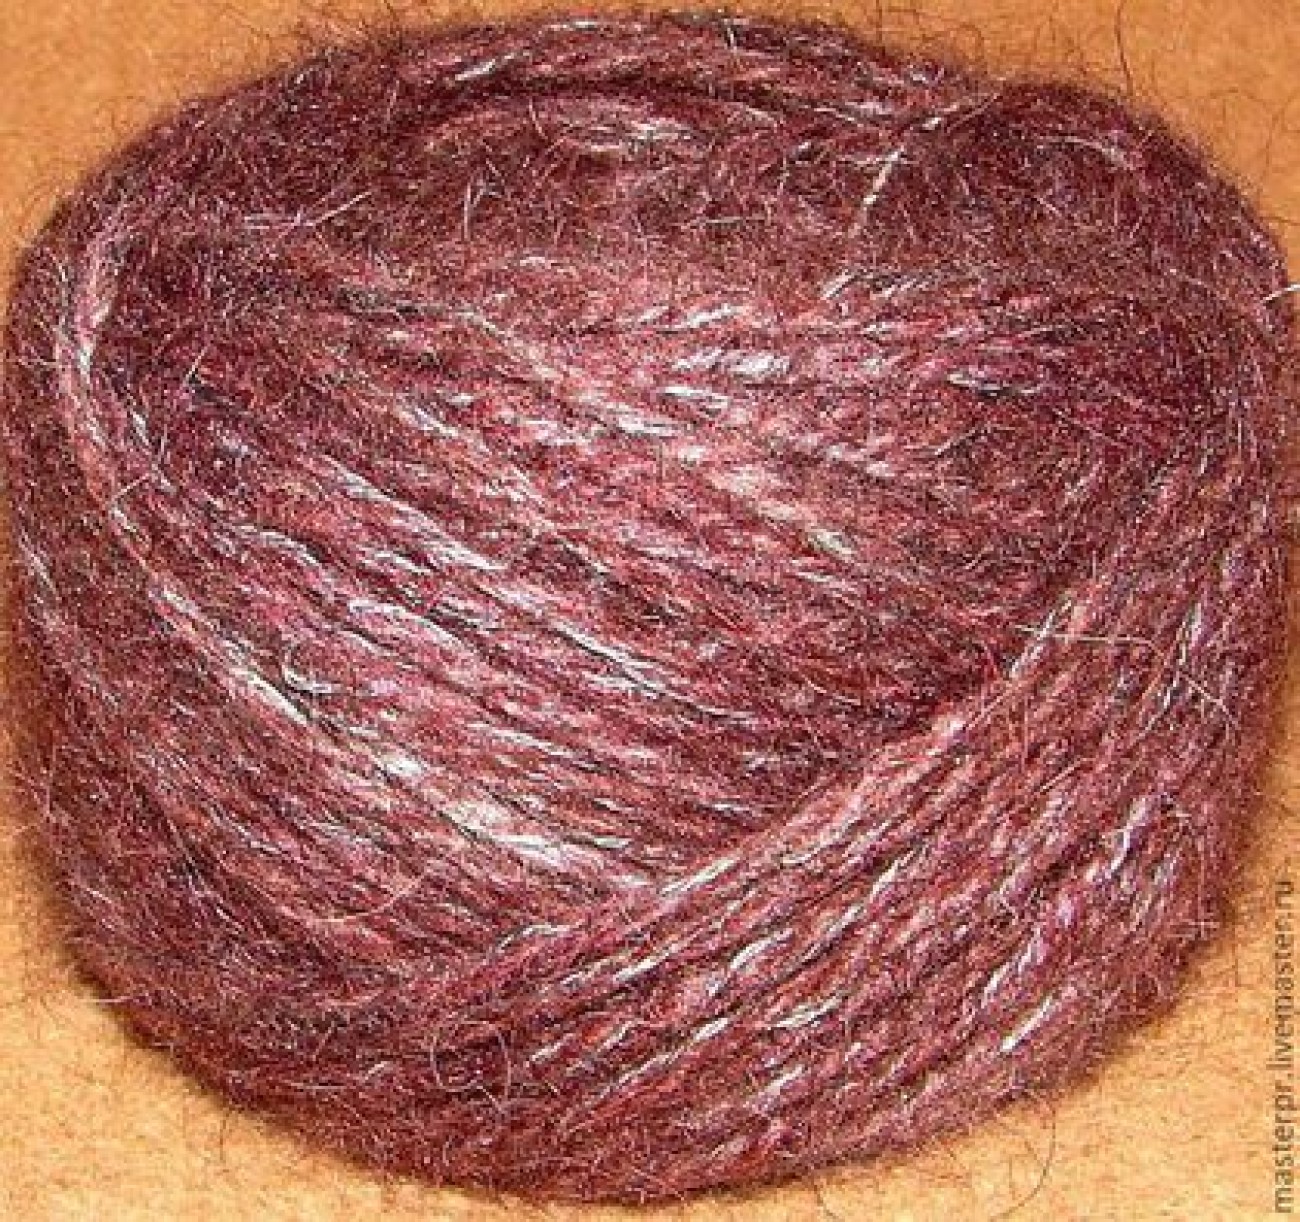 Пряжа «Весенняя Сказка баклажан» для ручного вязания